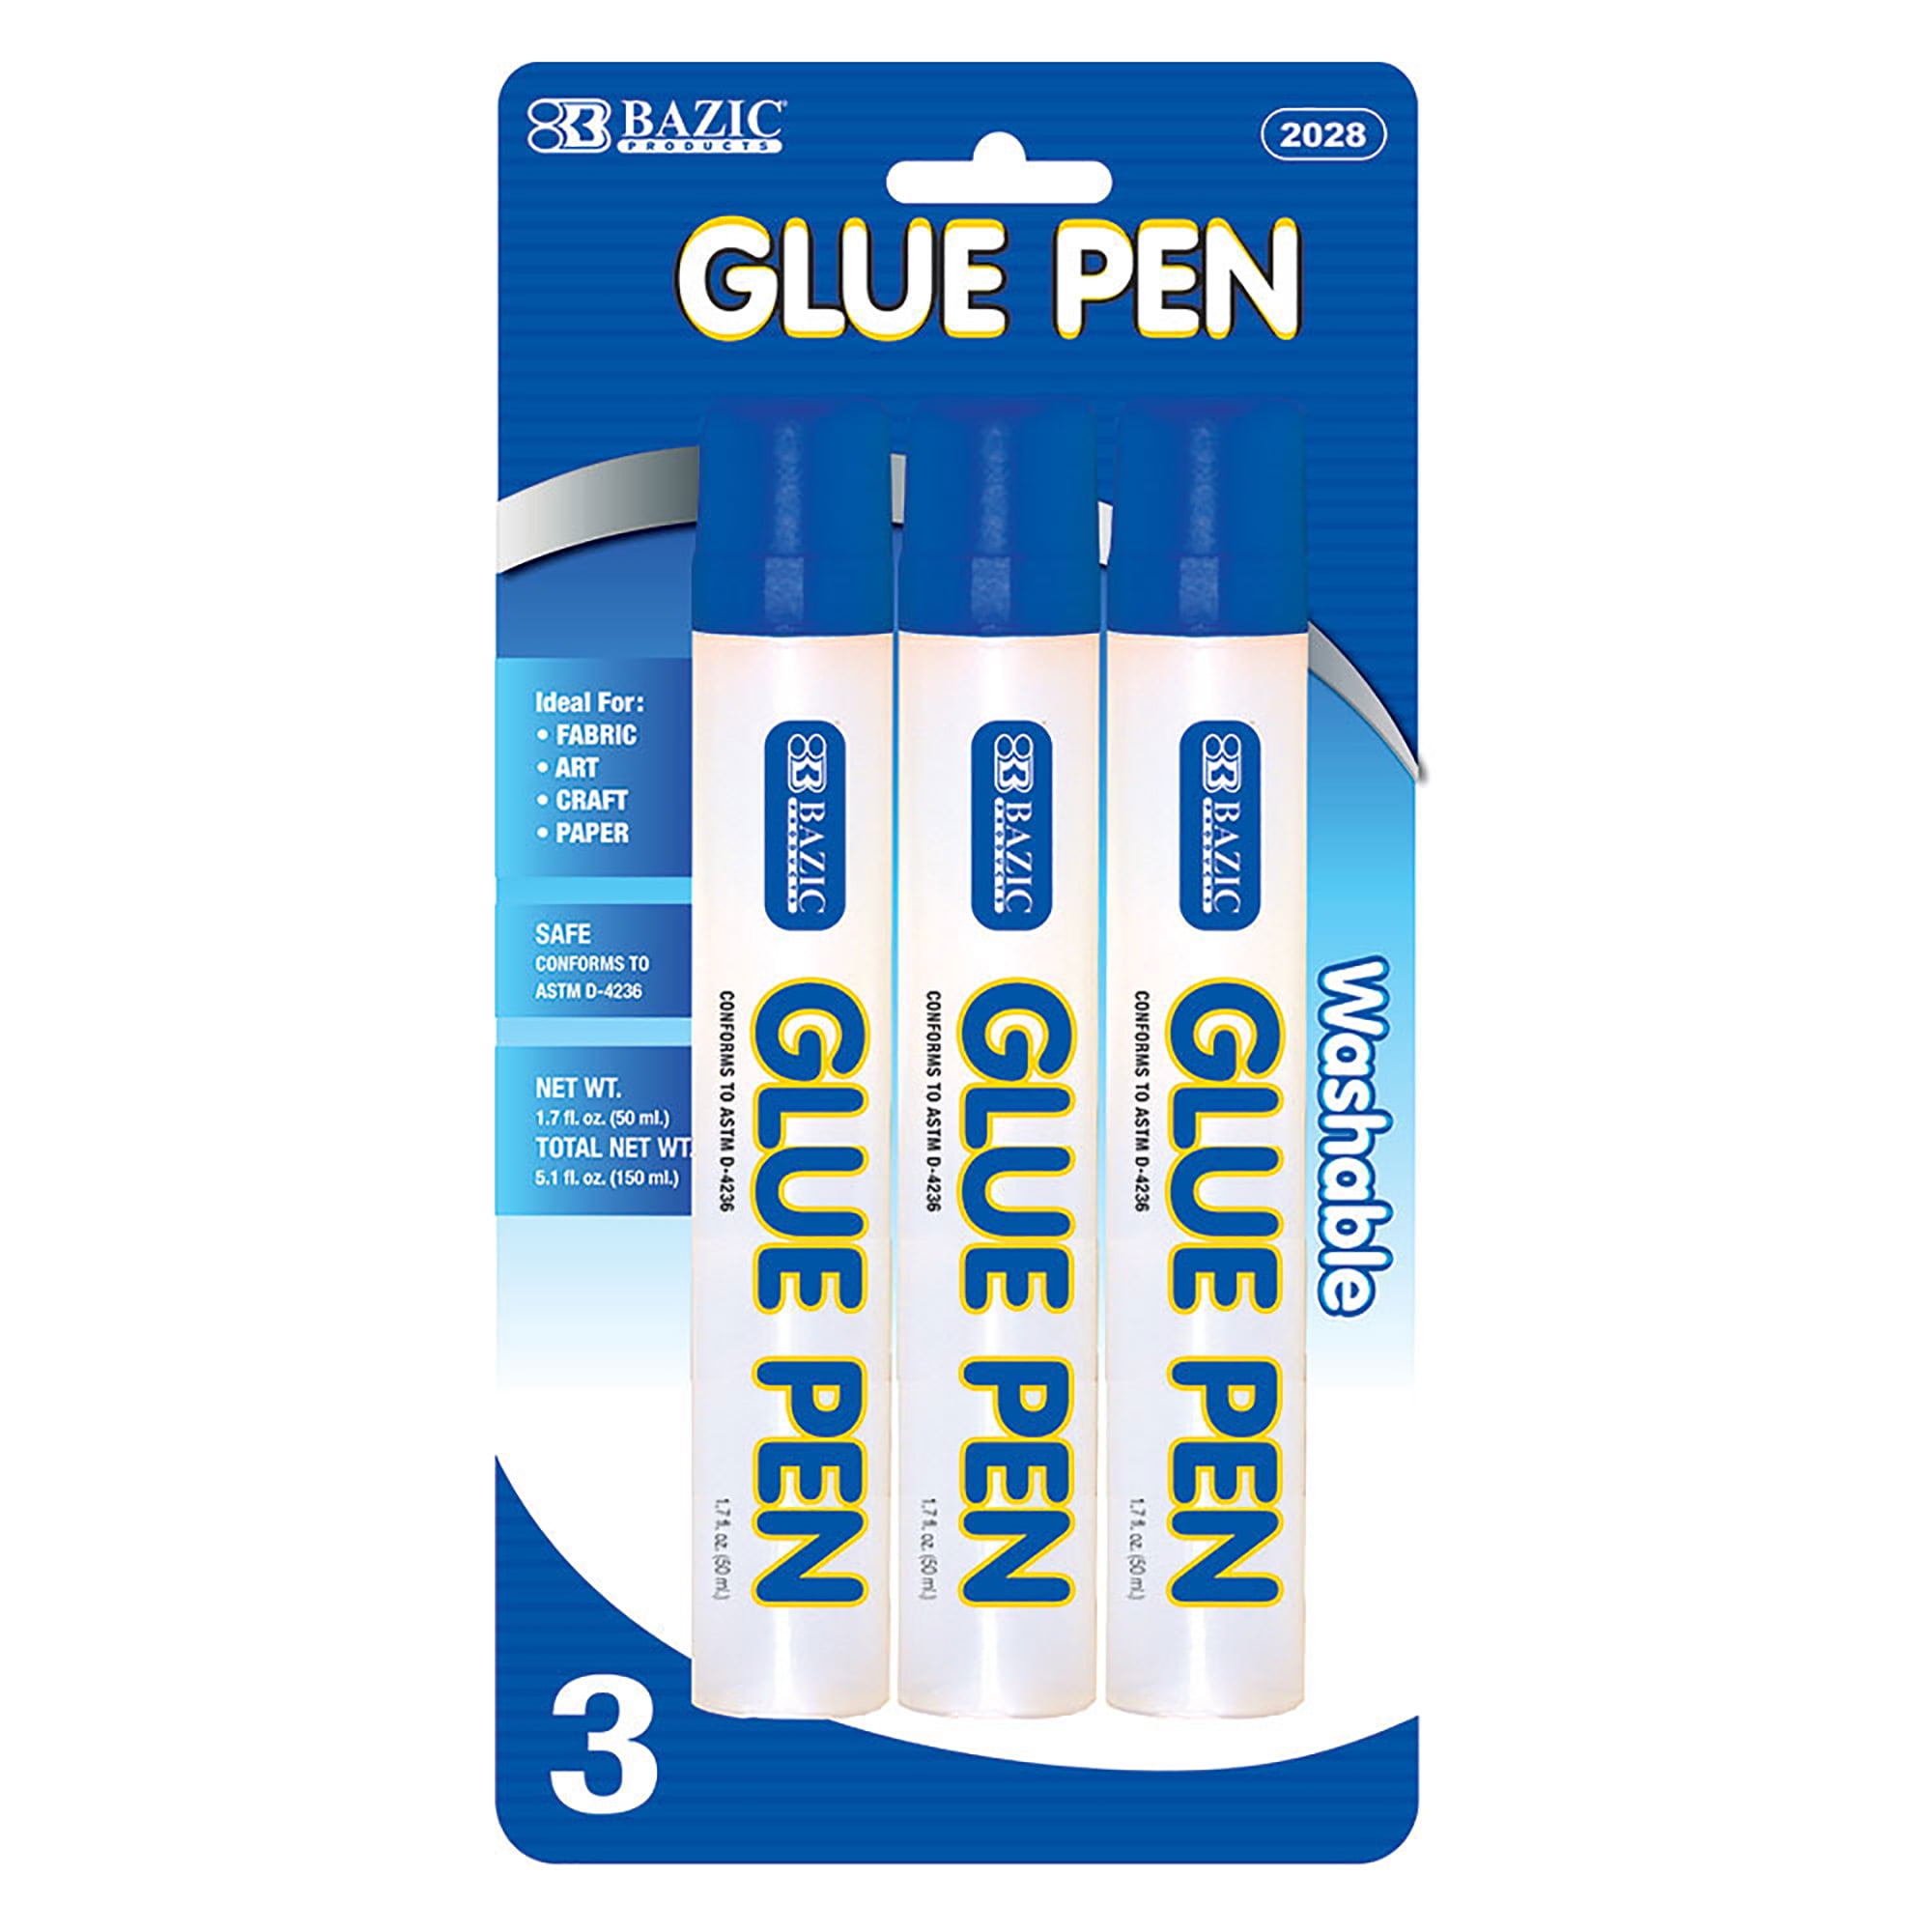 Beacon Glass, Metal And More Premium Permanent Glue 2 Oz. [Pack Of 3]  (3PK-GM15C) 